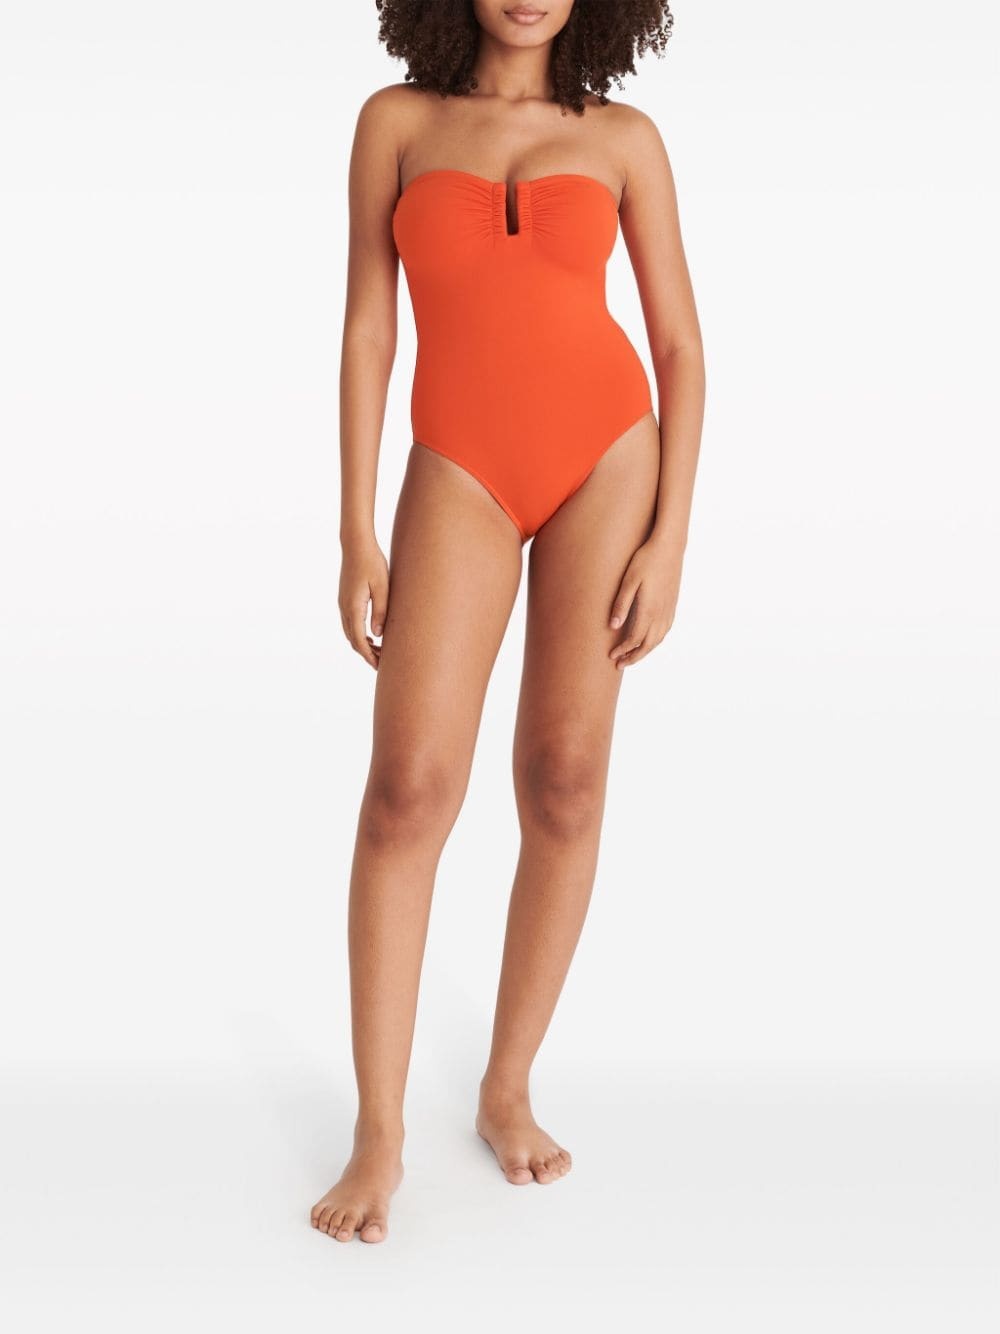 CassiopÃ©e strapless swimsuit - 3